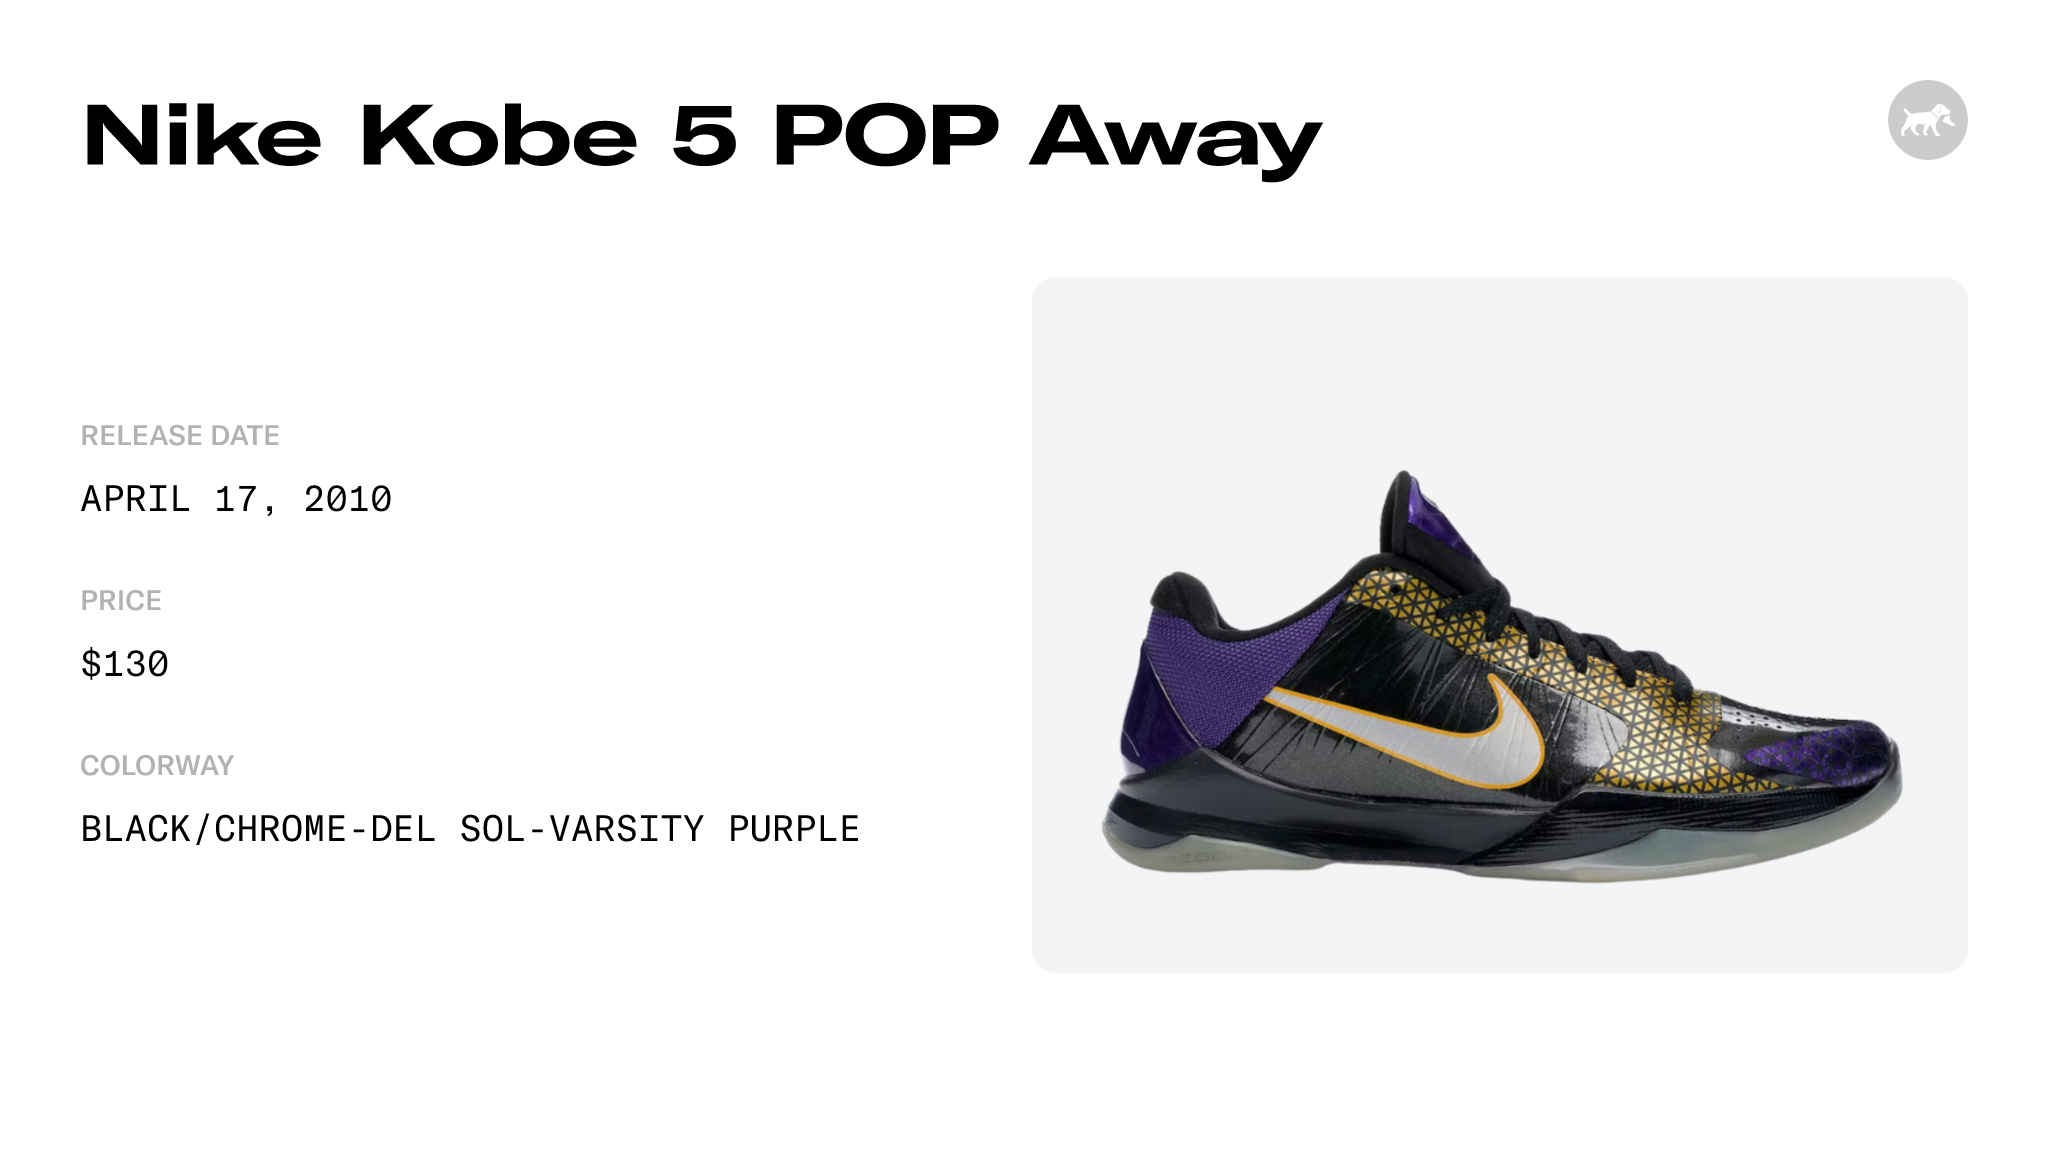 Nike Kobe 5 POP Away ナイキ コービー5 ポップ アウェイファッション